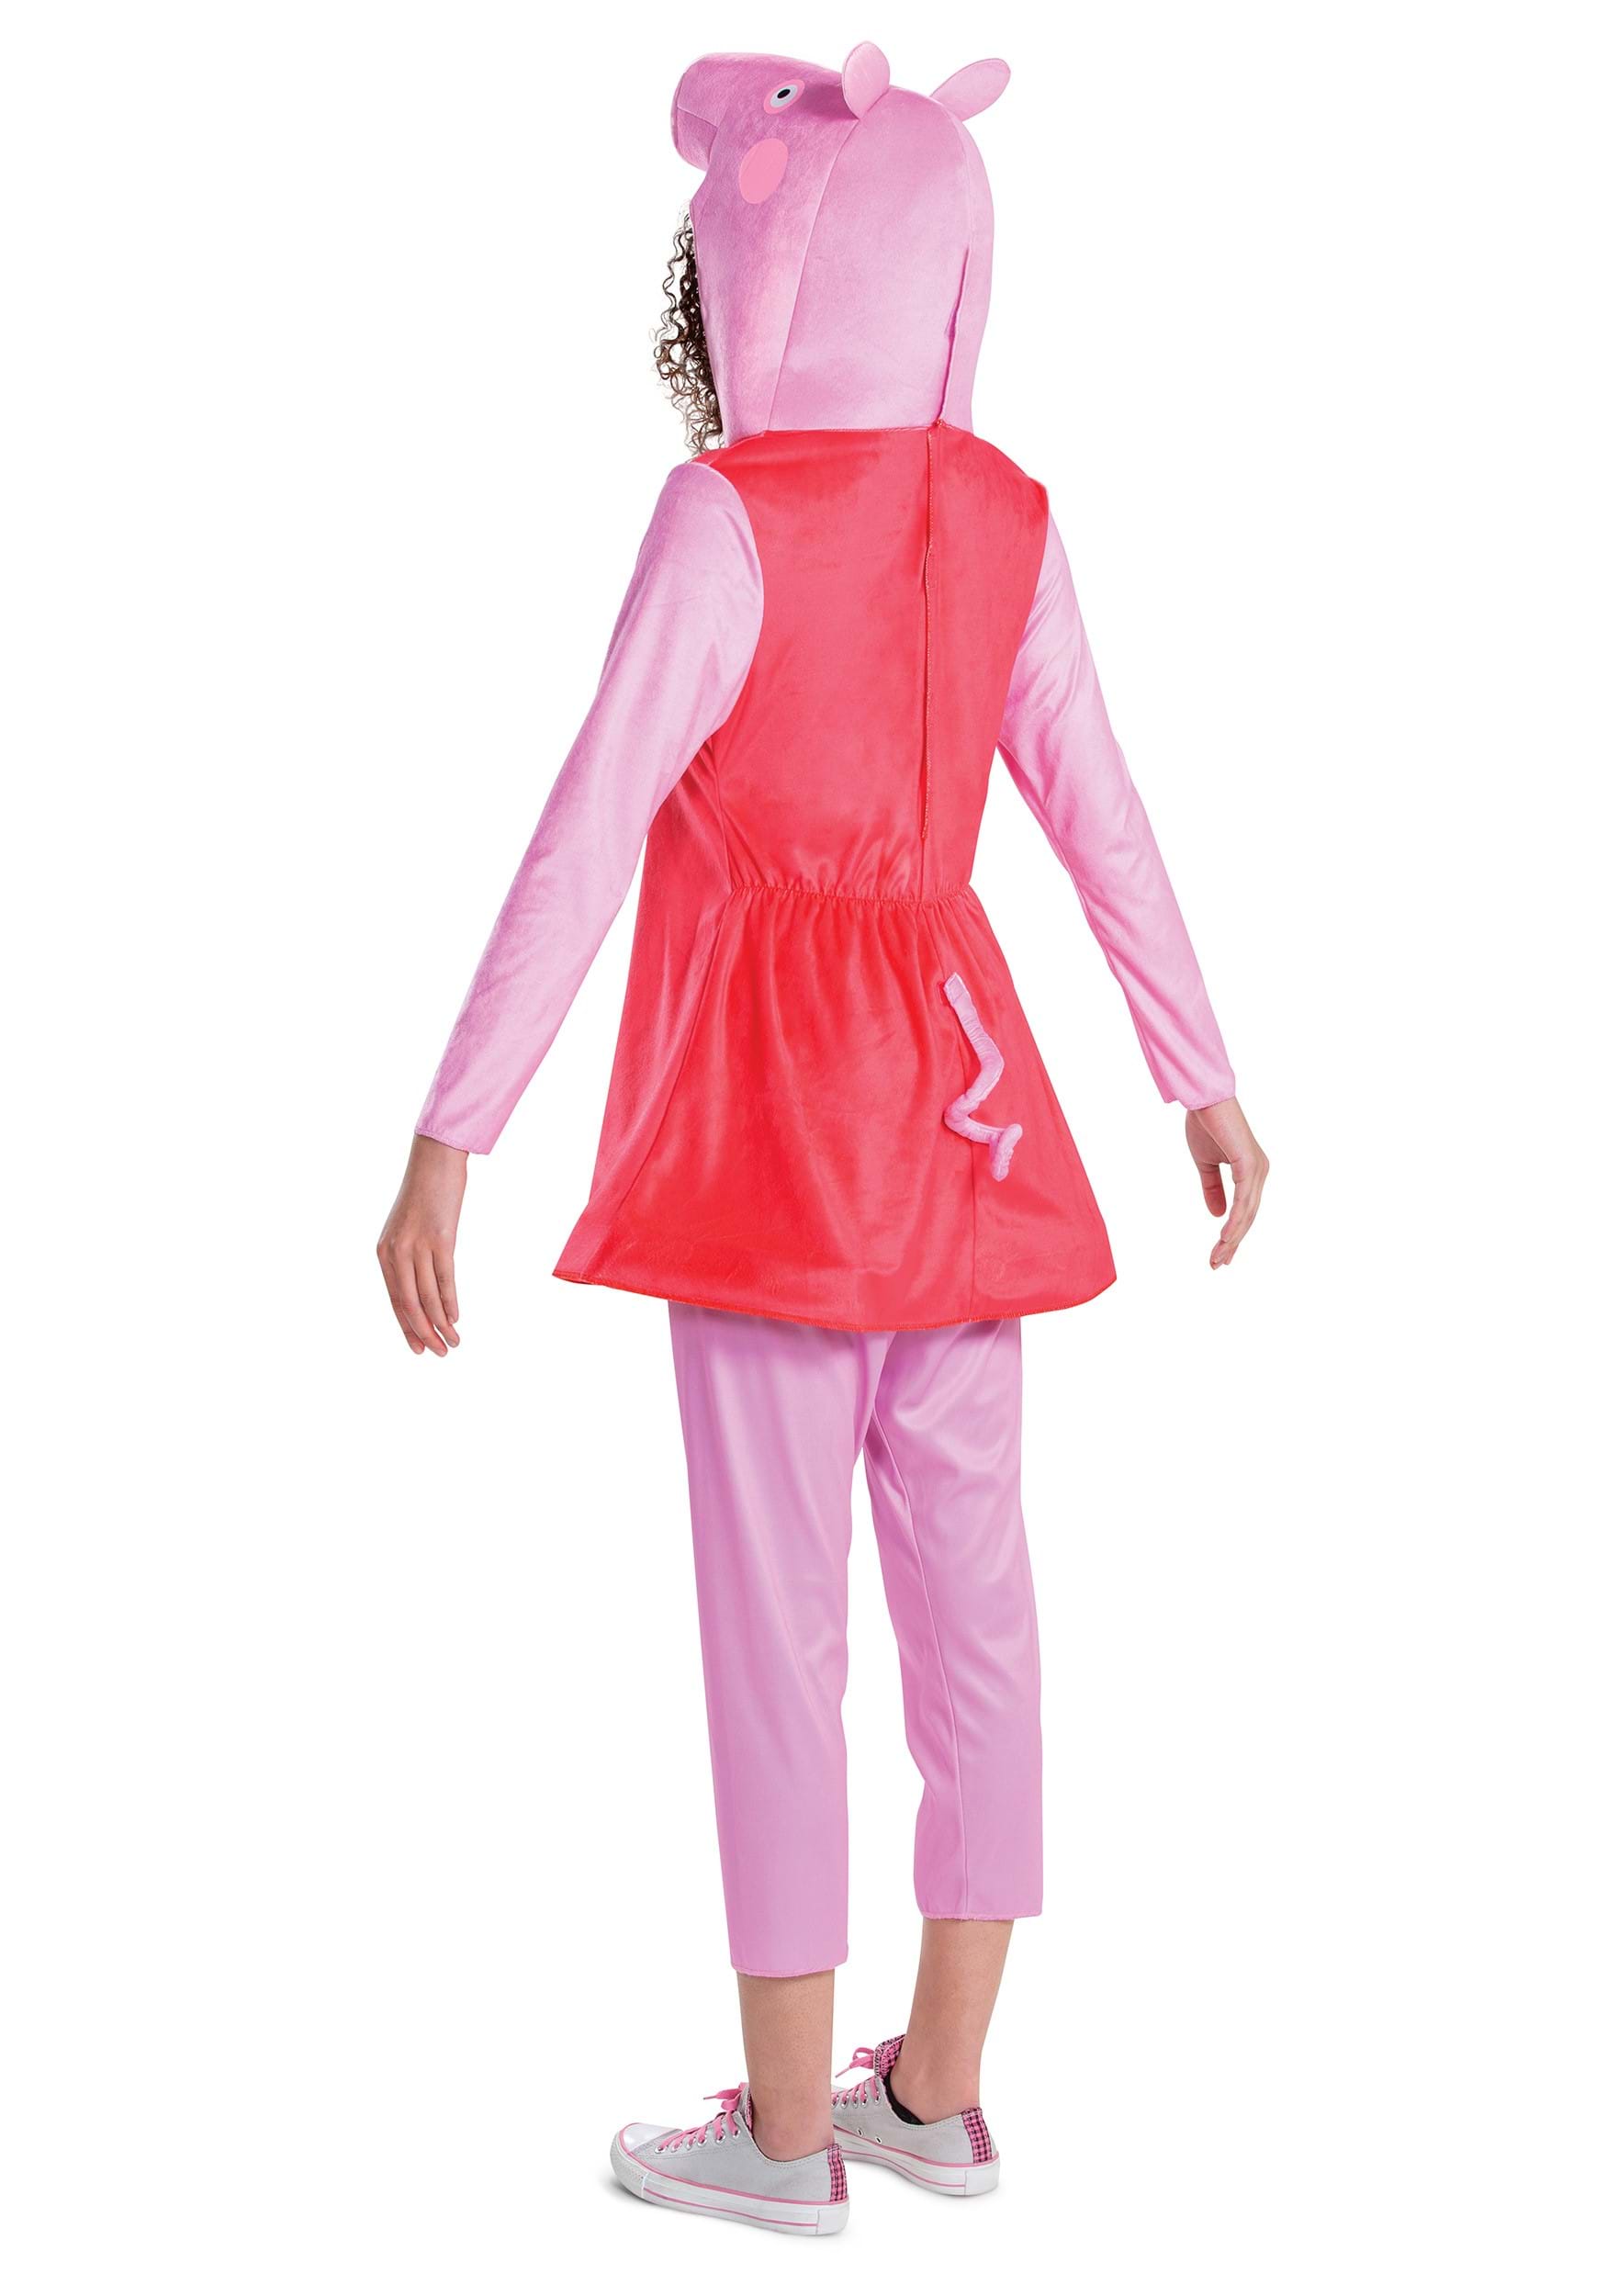 Women's Peppa Pig Adult Deluxe Costume